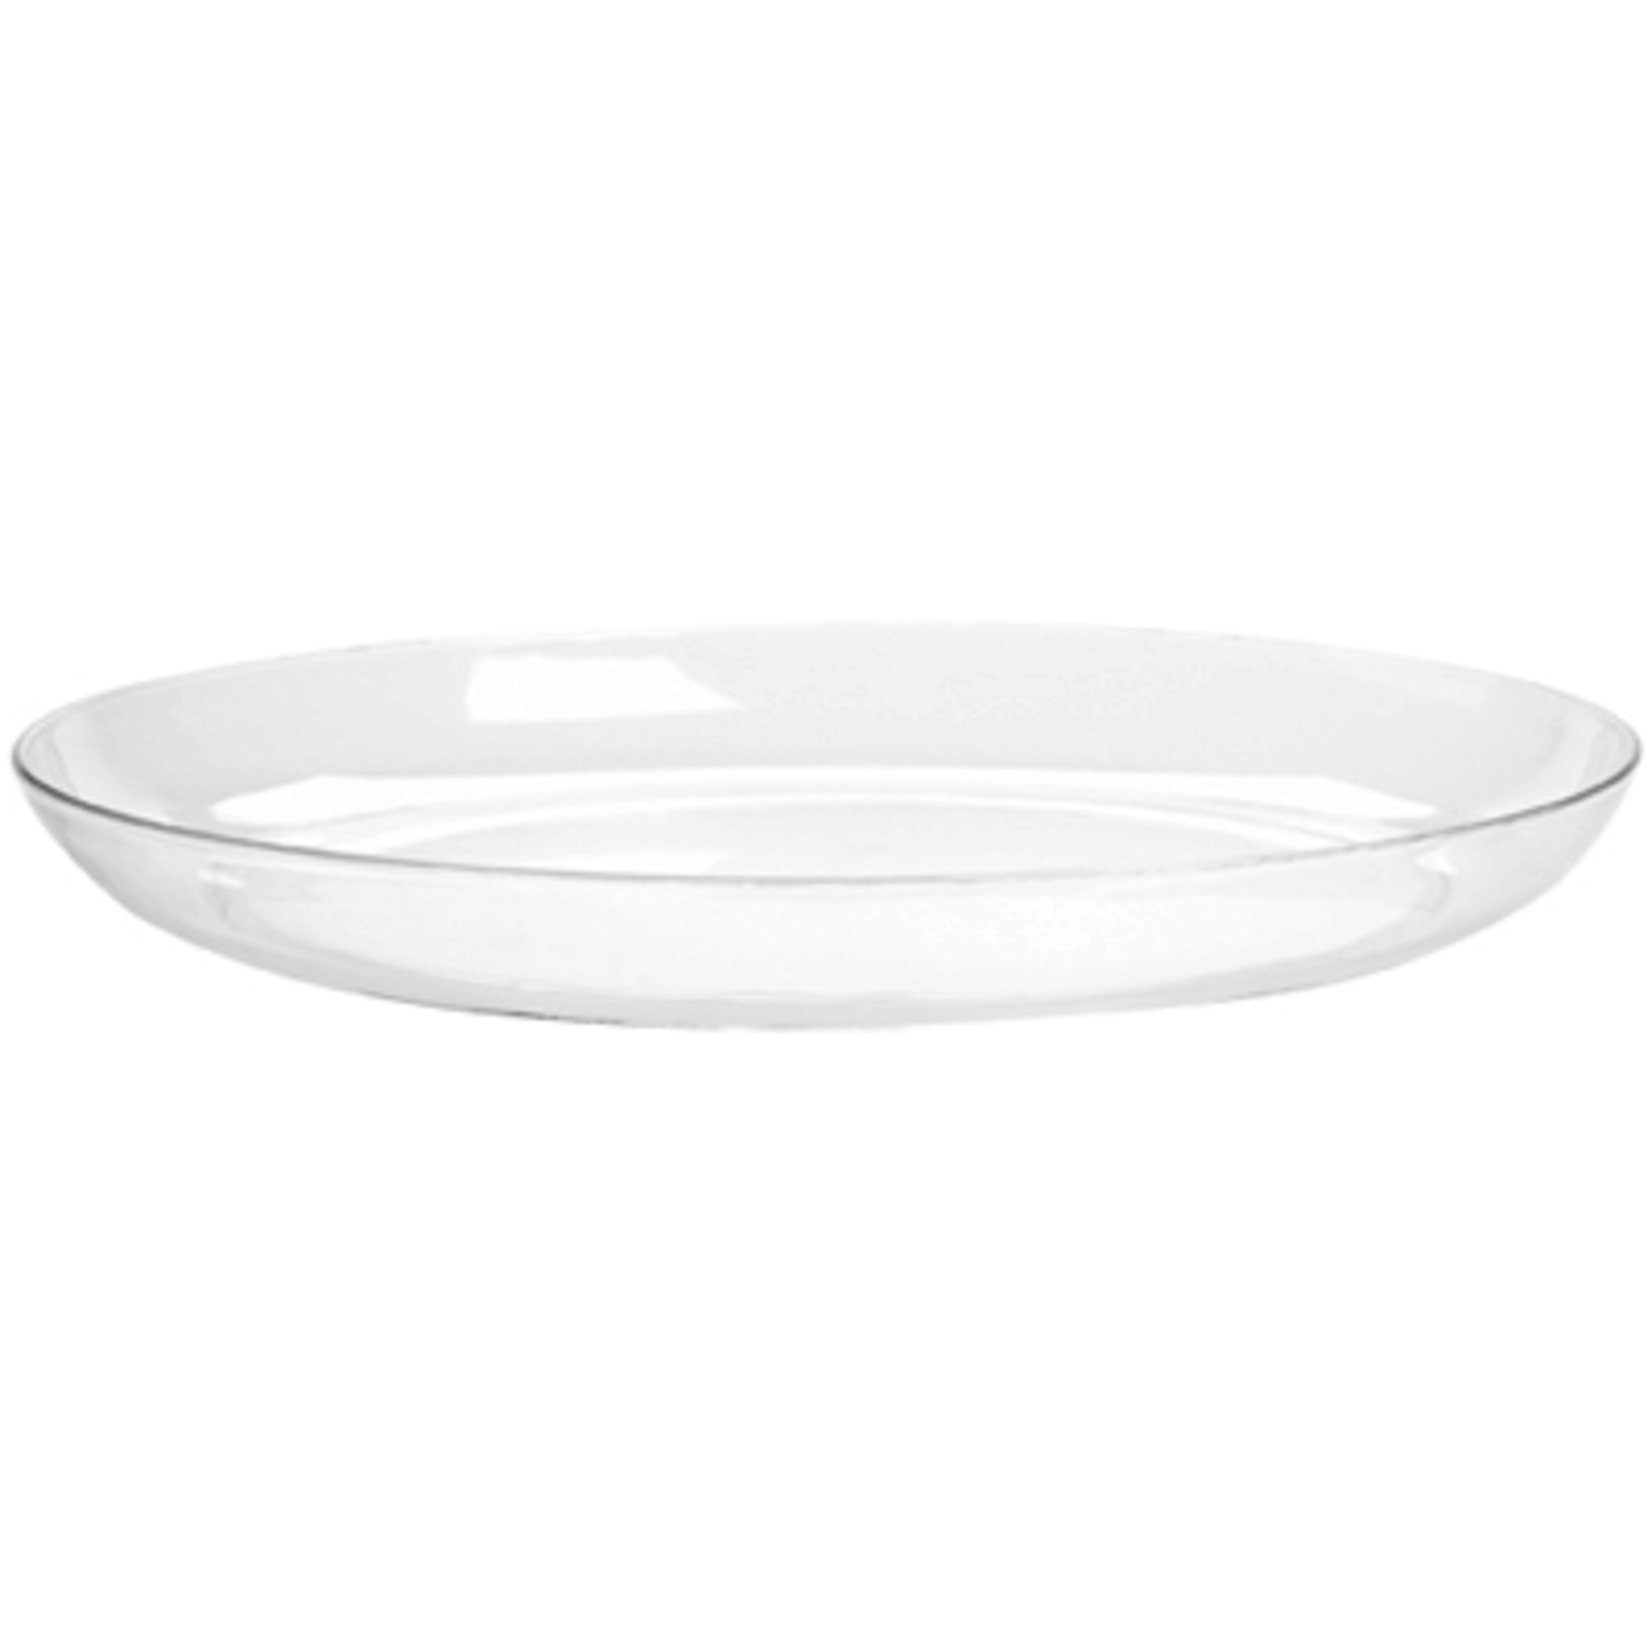 6" Designer Dish - Crystal 99996c